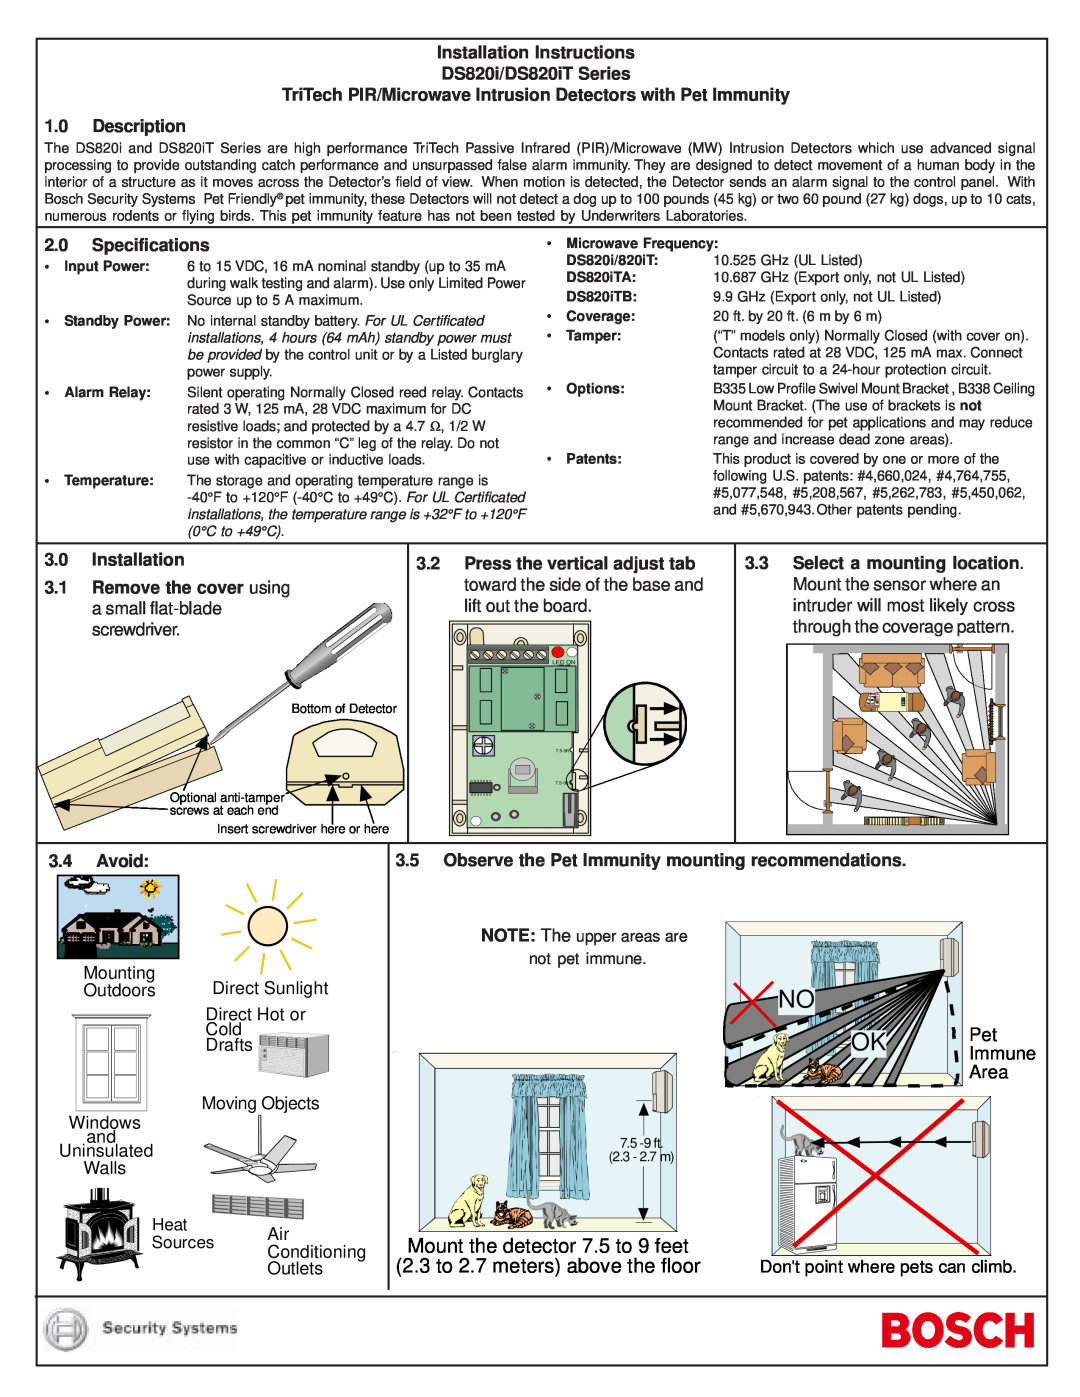 Bosch Appliances DS820IT installation instructions Immune, Area, Installation Instructions DS820i/DS820iT Series, Avoid 